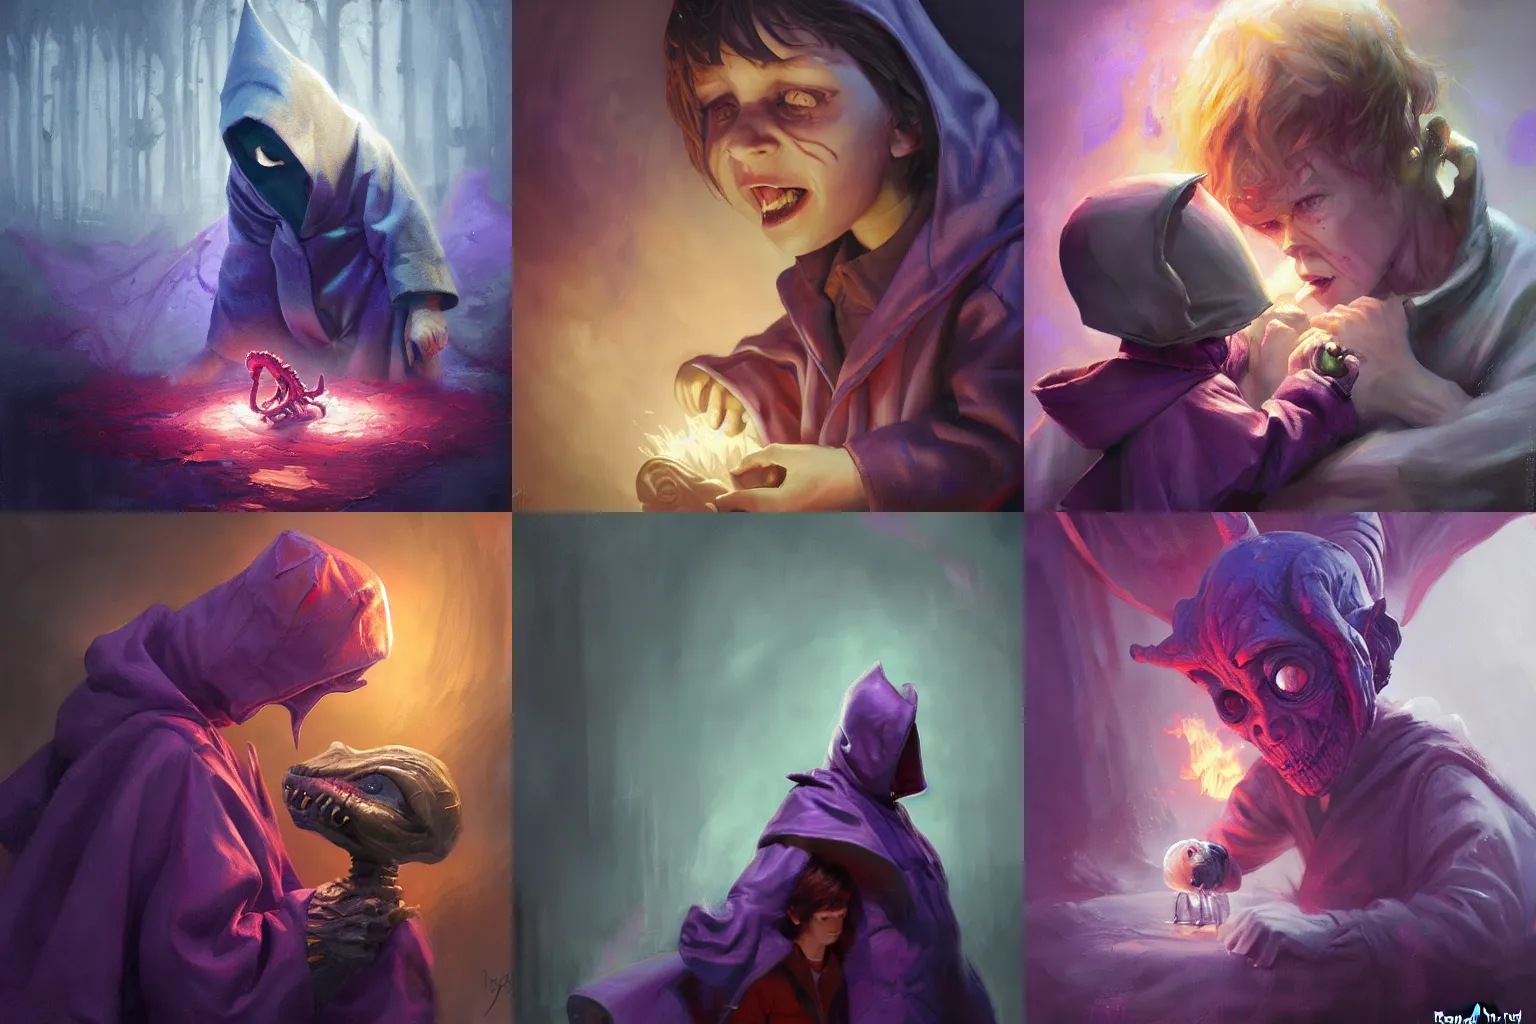 Image similar to Little nightmares, purple raincoat, fiery eyes, cuddling the demogorgon, painted by raymond swanland